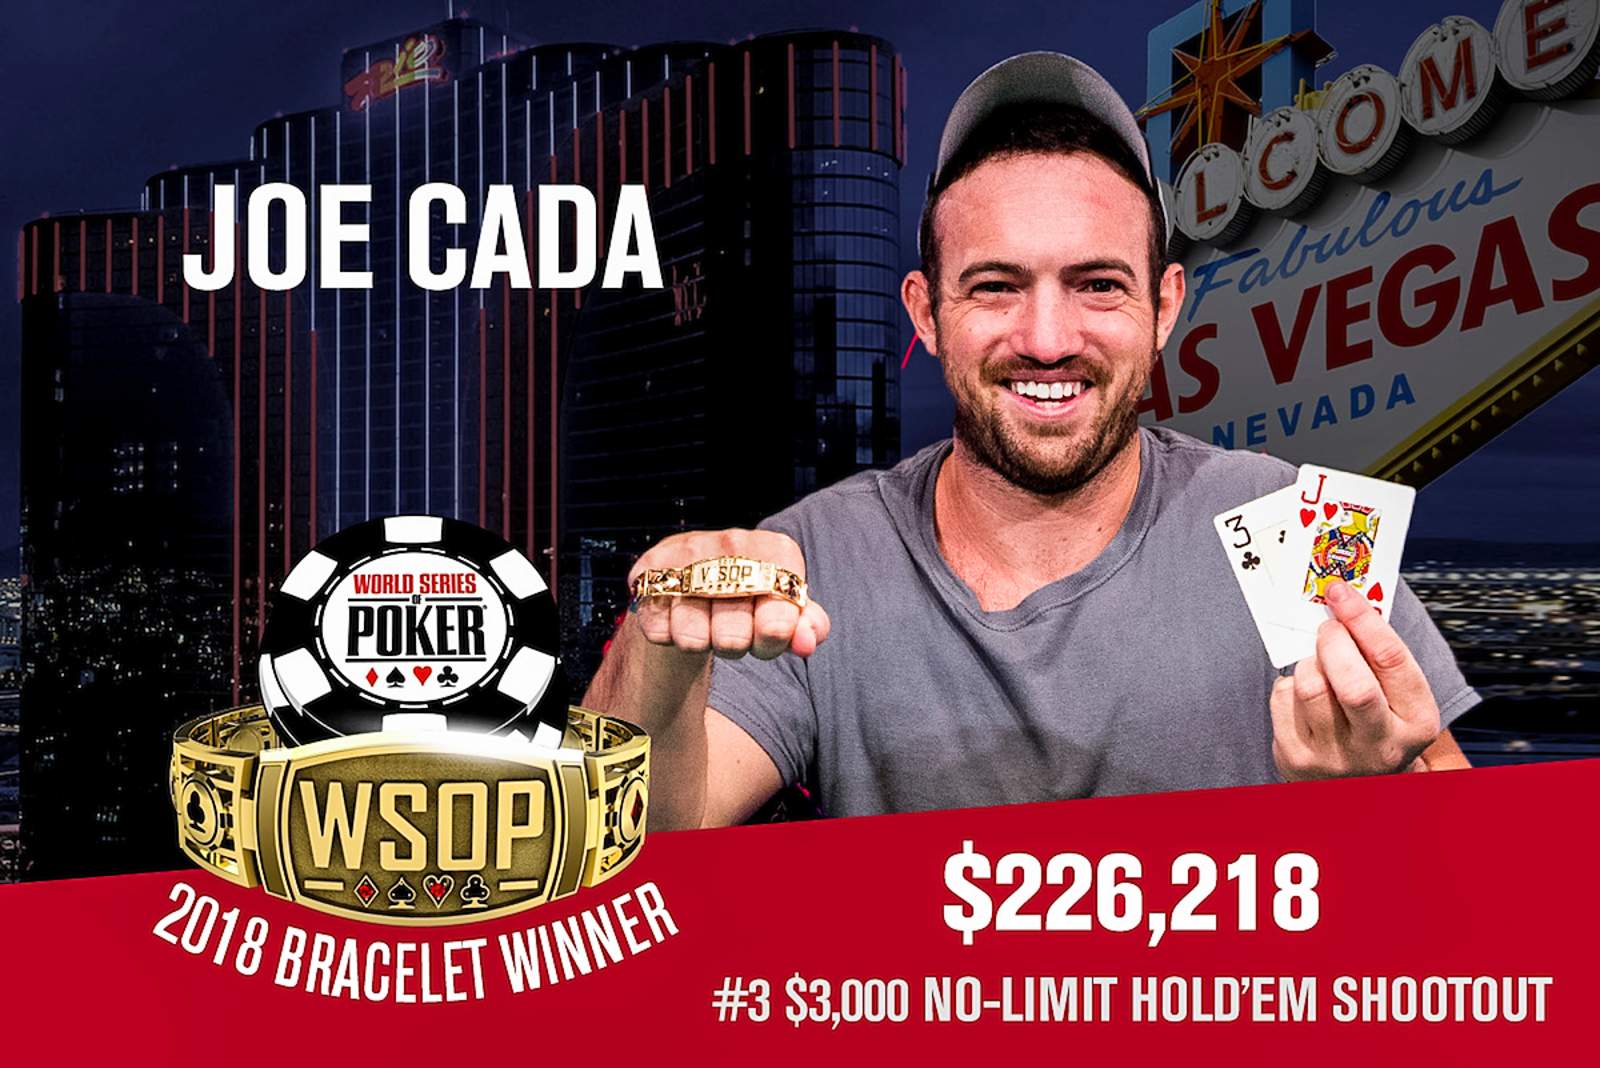 Joe Cada Wins $3,000 No Limit Hold'em Shootout on PokerGO